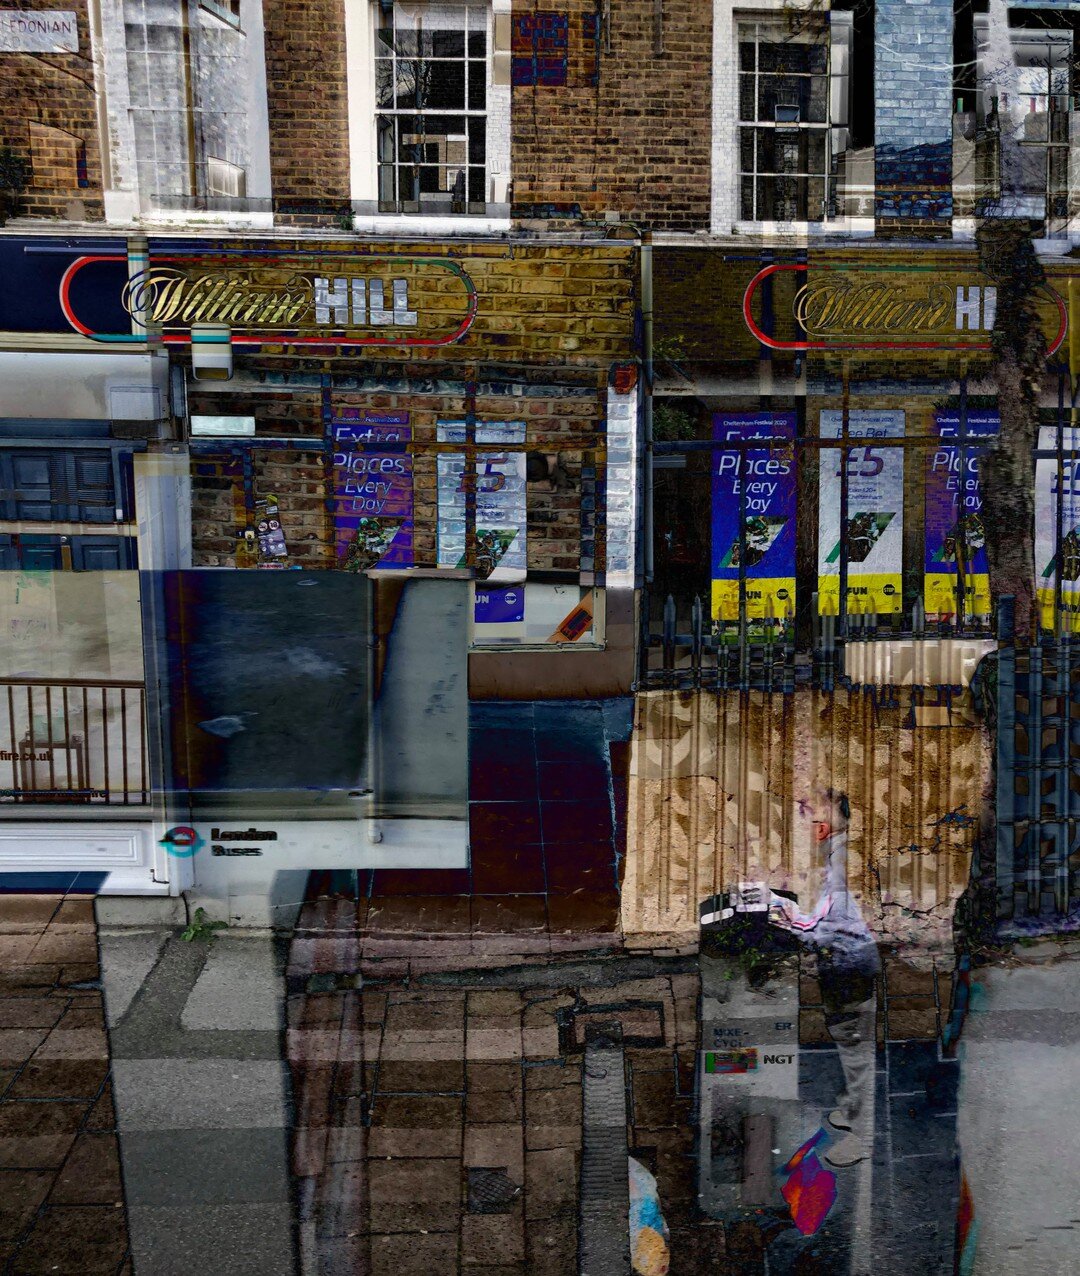 Sunday stroll in #london🇬🇧
.
.
.
.
#GlitchGrind #LayersOfLondon #StreetGlitch #ukartscene #icmphotographymagazine #DigitalGraffiti #Glitching #LondonRoad #icmphotography #Glitchy #LondonCityWorld #Lane #DataBending #Abstractogram #Photooftheday #St